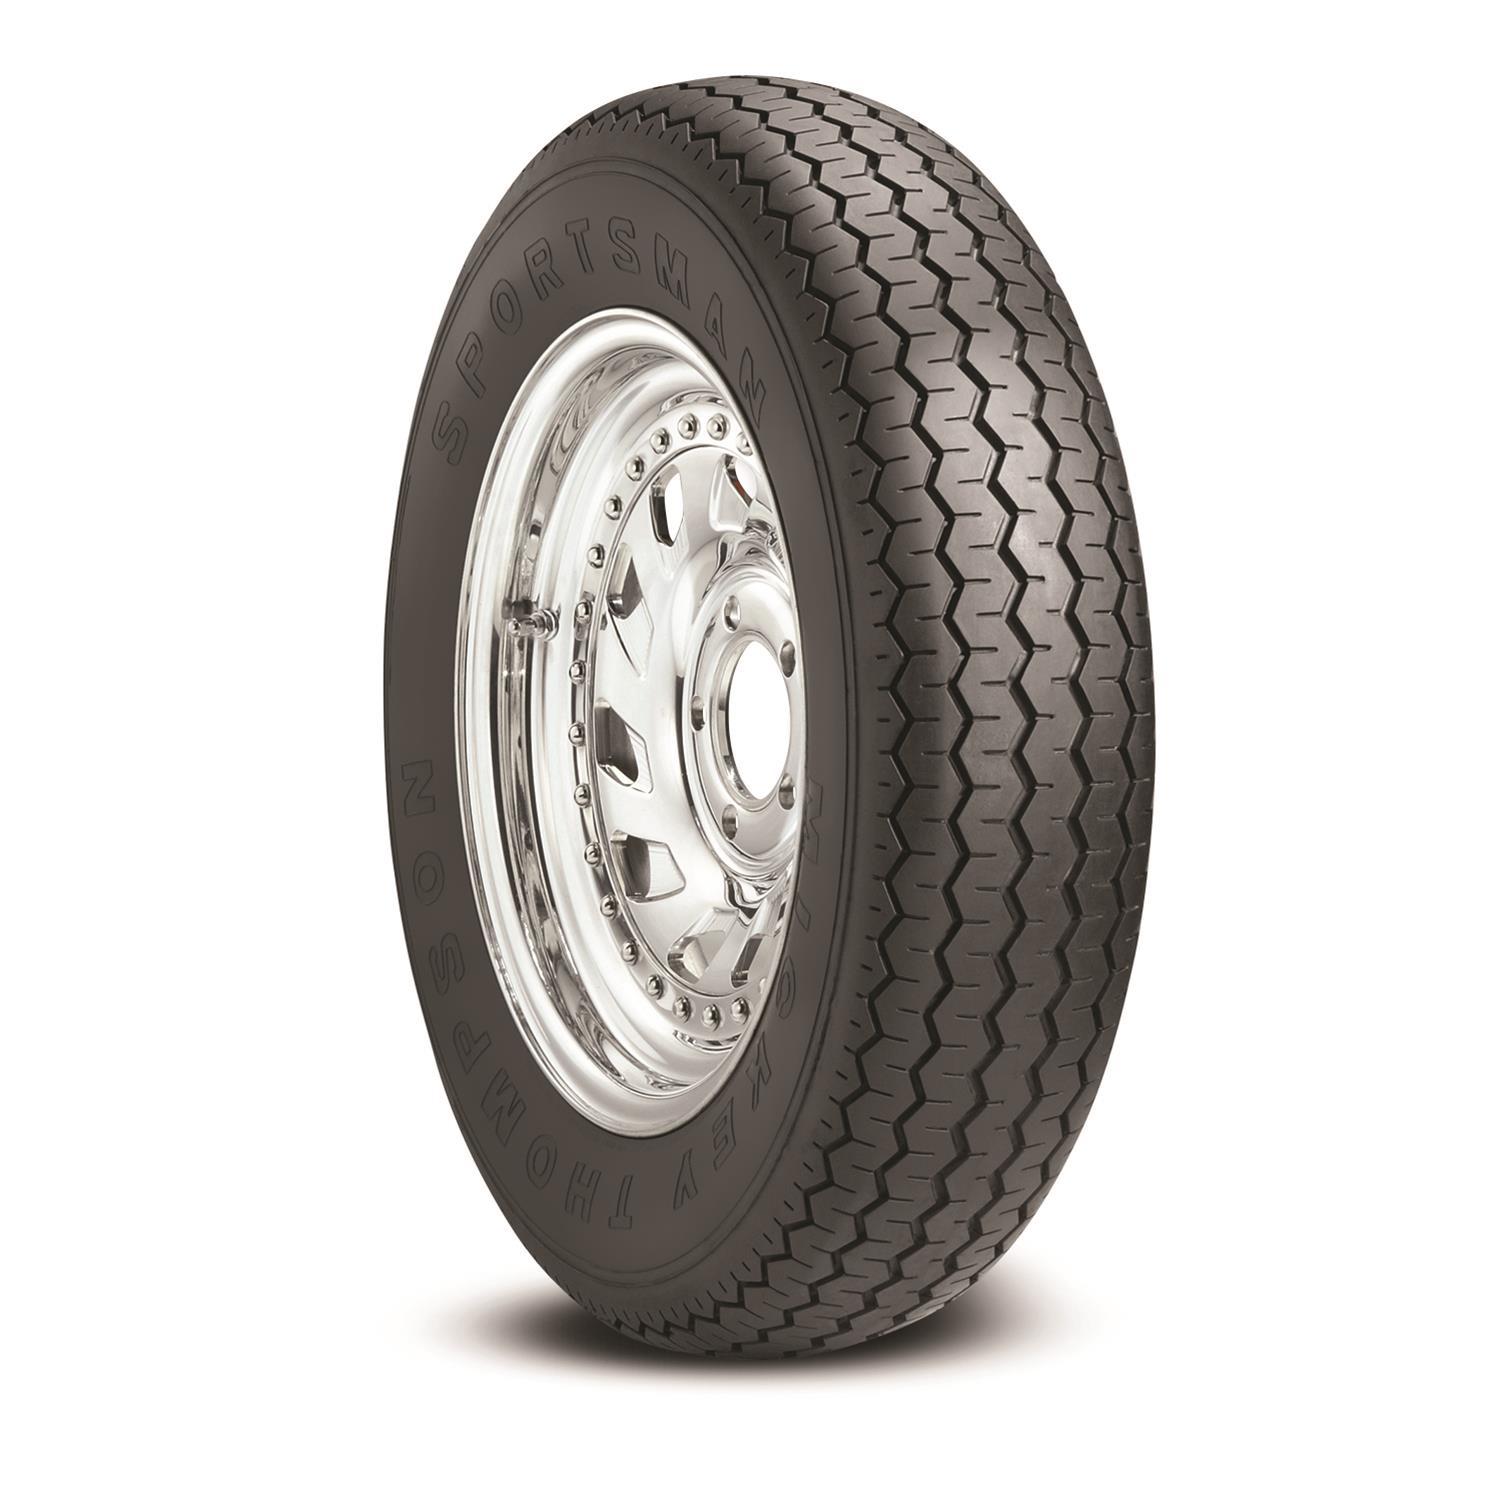 26x7.50-15LT Sportsman Front Tire - 255670